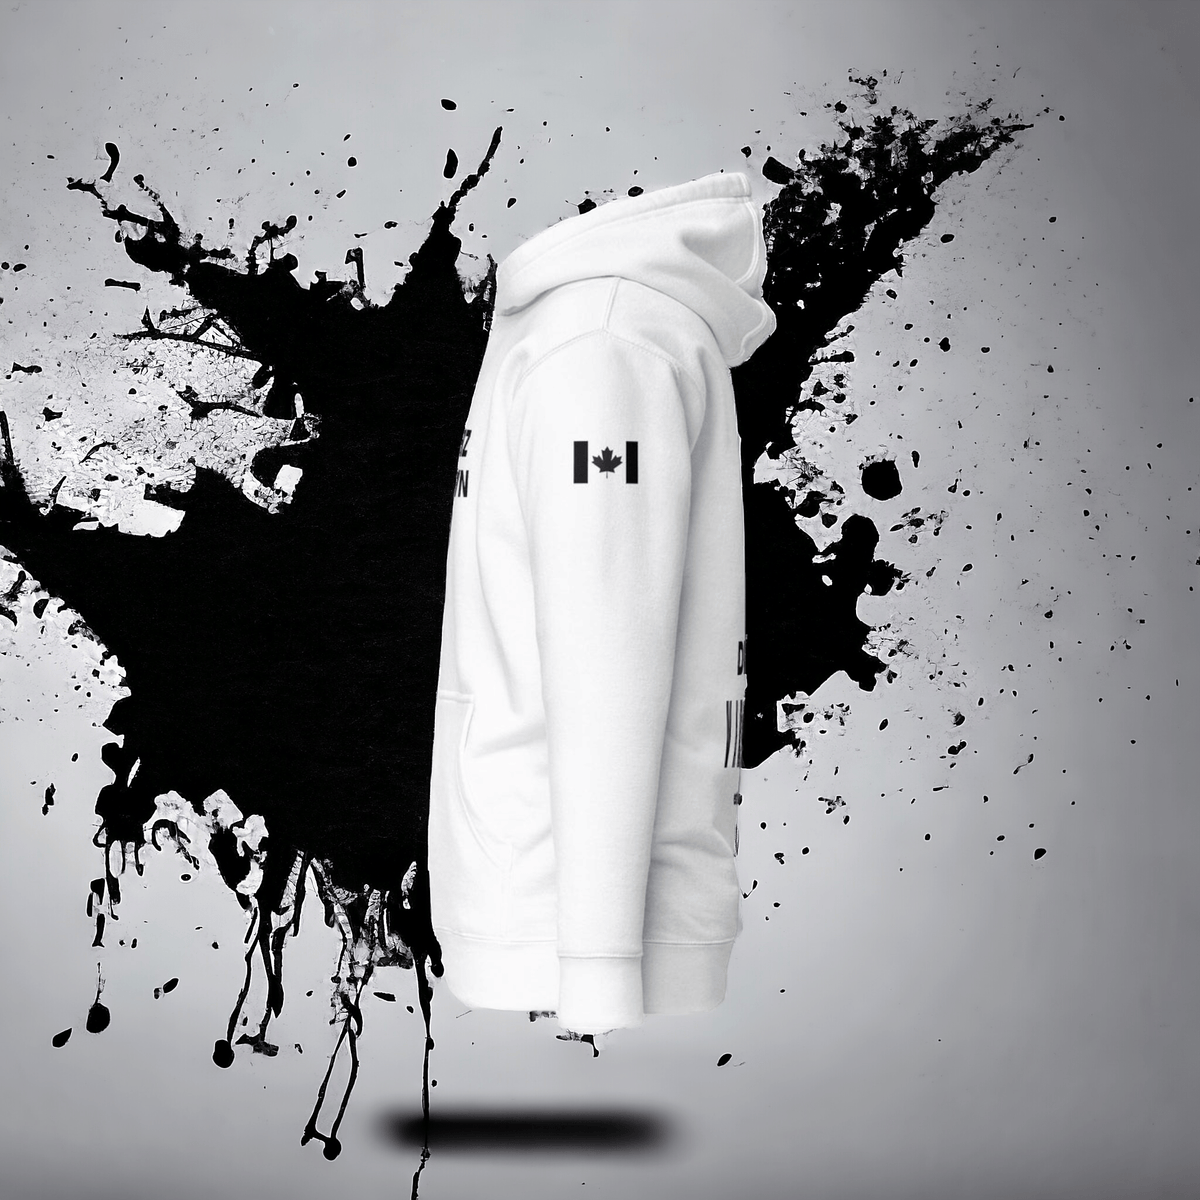 Hanz Driven Motor Streetwear featuring Canada flag